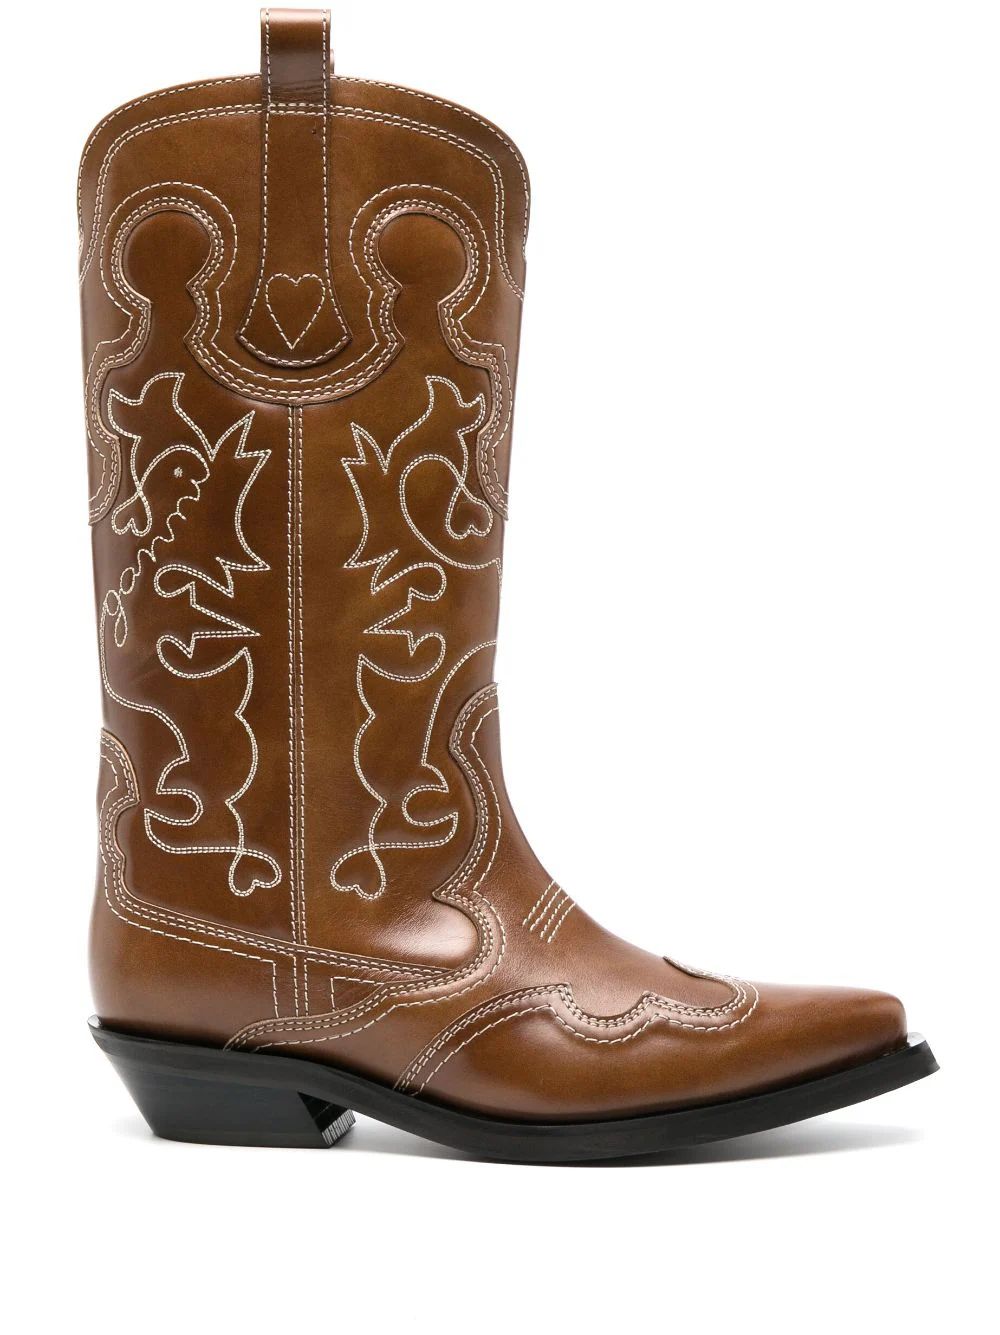 50mm mid-calf western boots | Farfetch Global